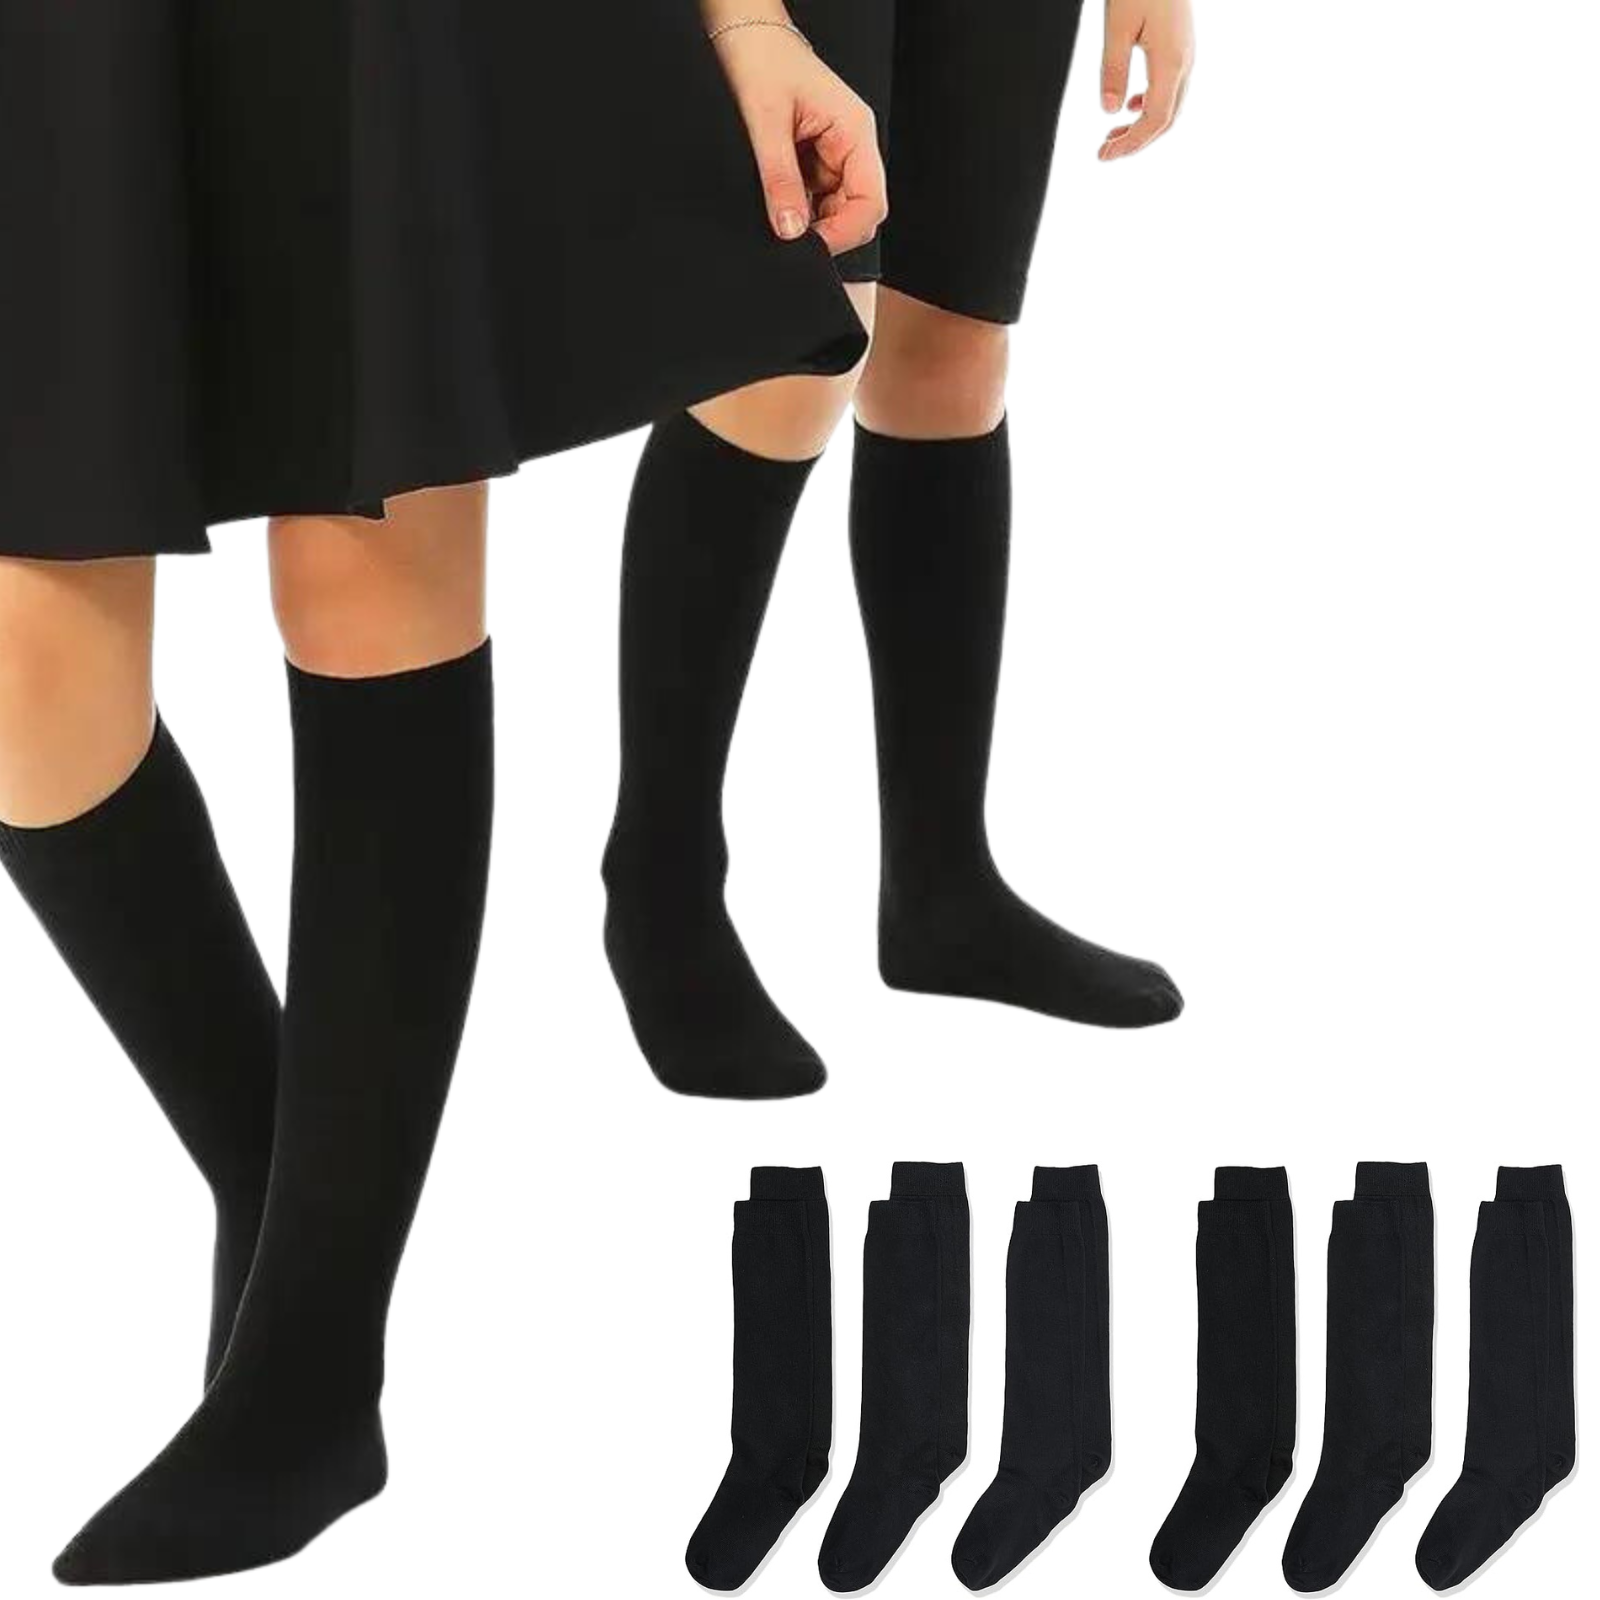 6x Pairs School Uniform Knee High Socks Cotton Rich Girls Boys Kids Bulk - Black - 13-3 (8-10 Years Old)